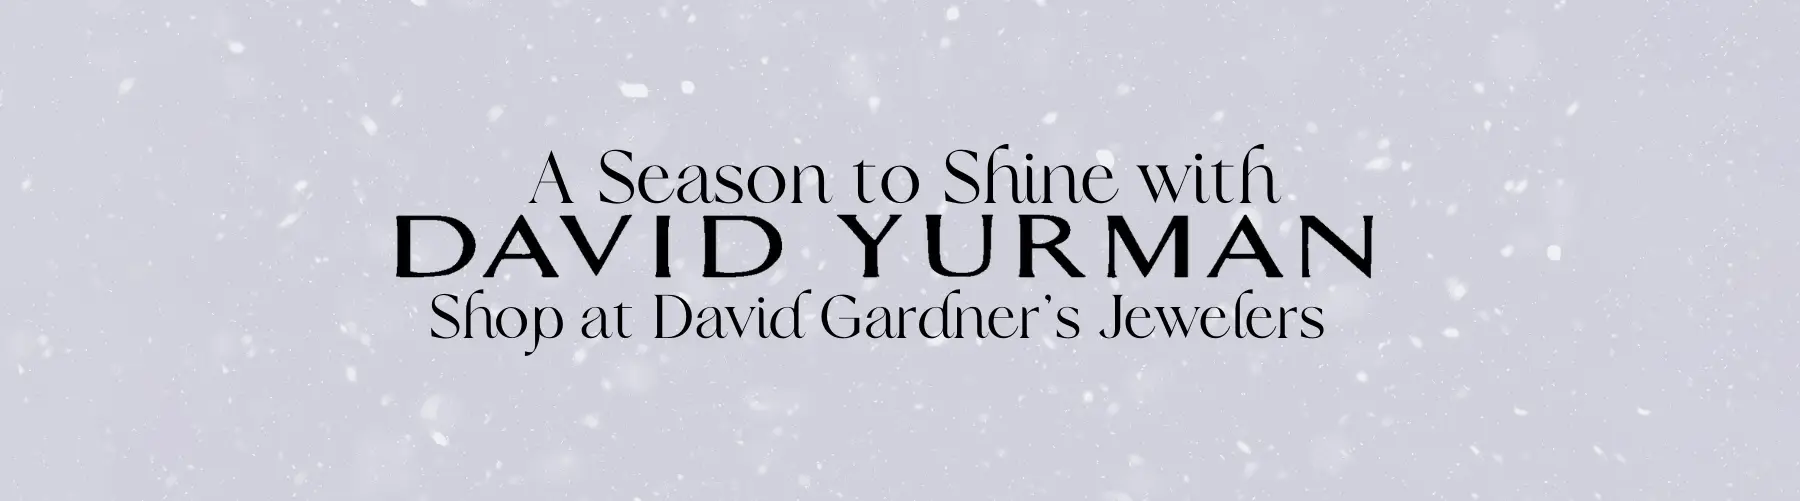 A season to chine David Yurman graphic mobile